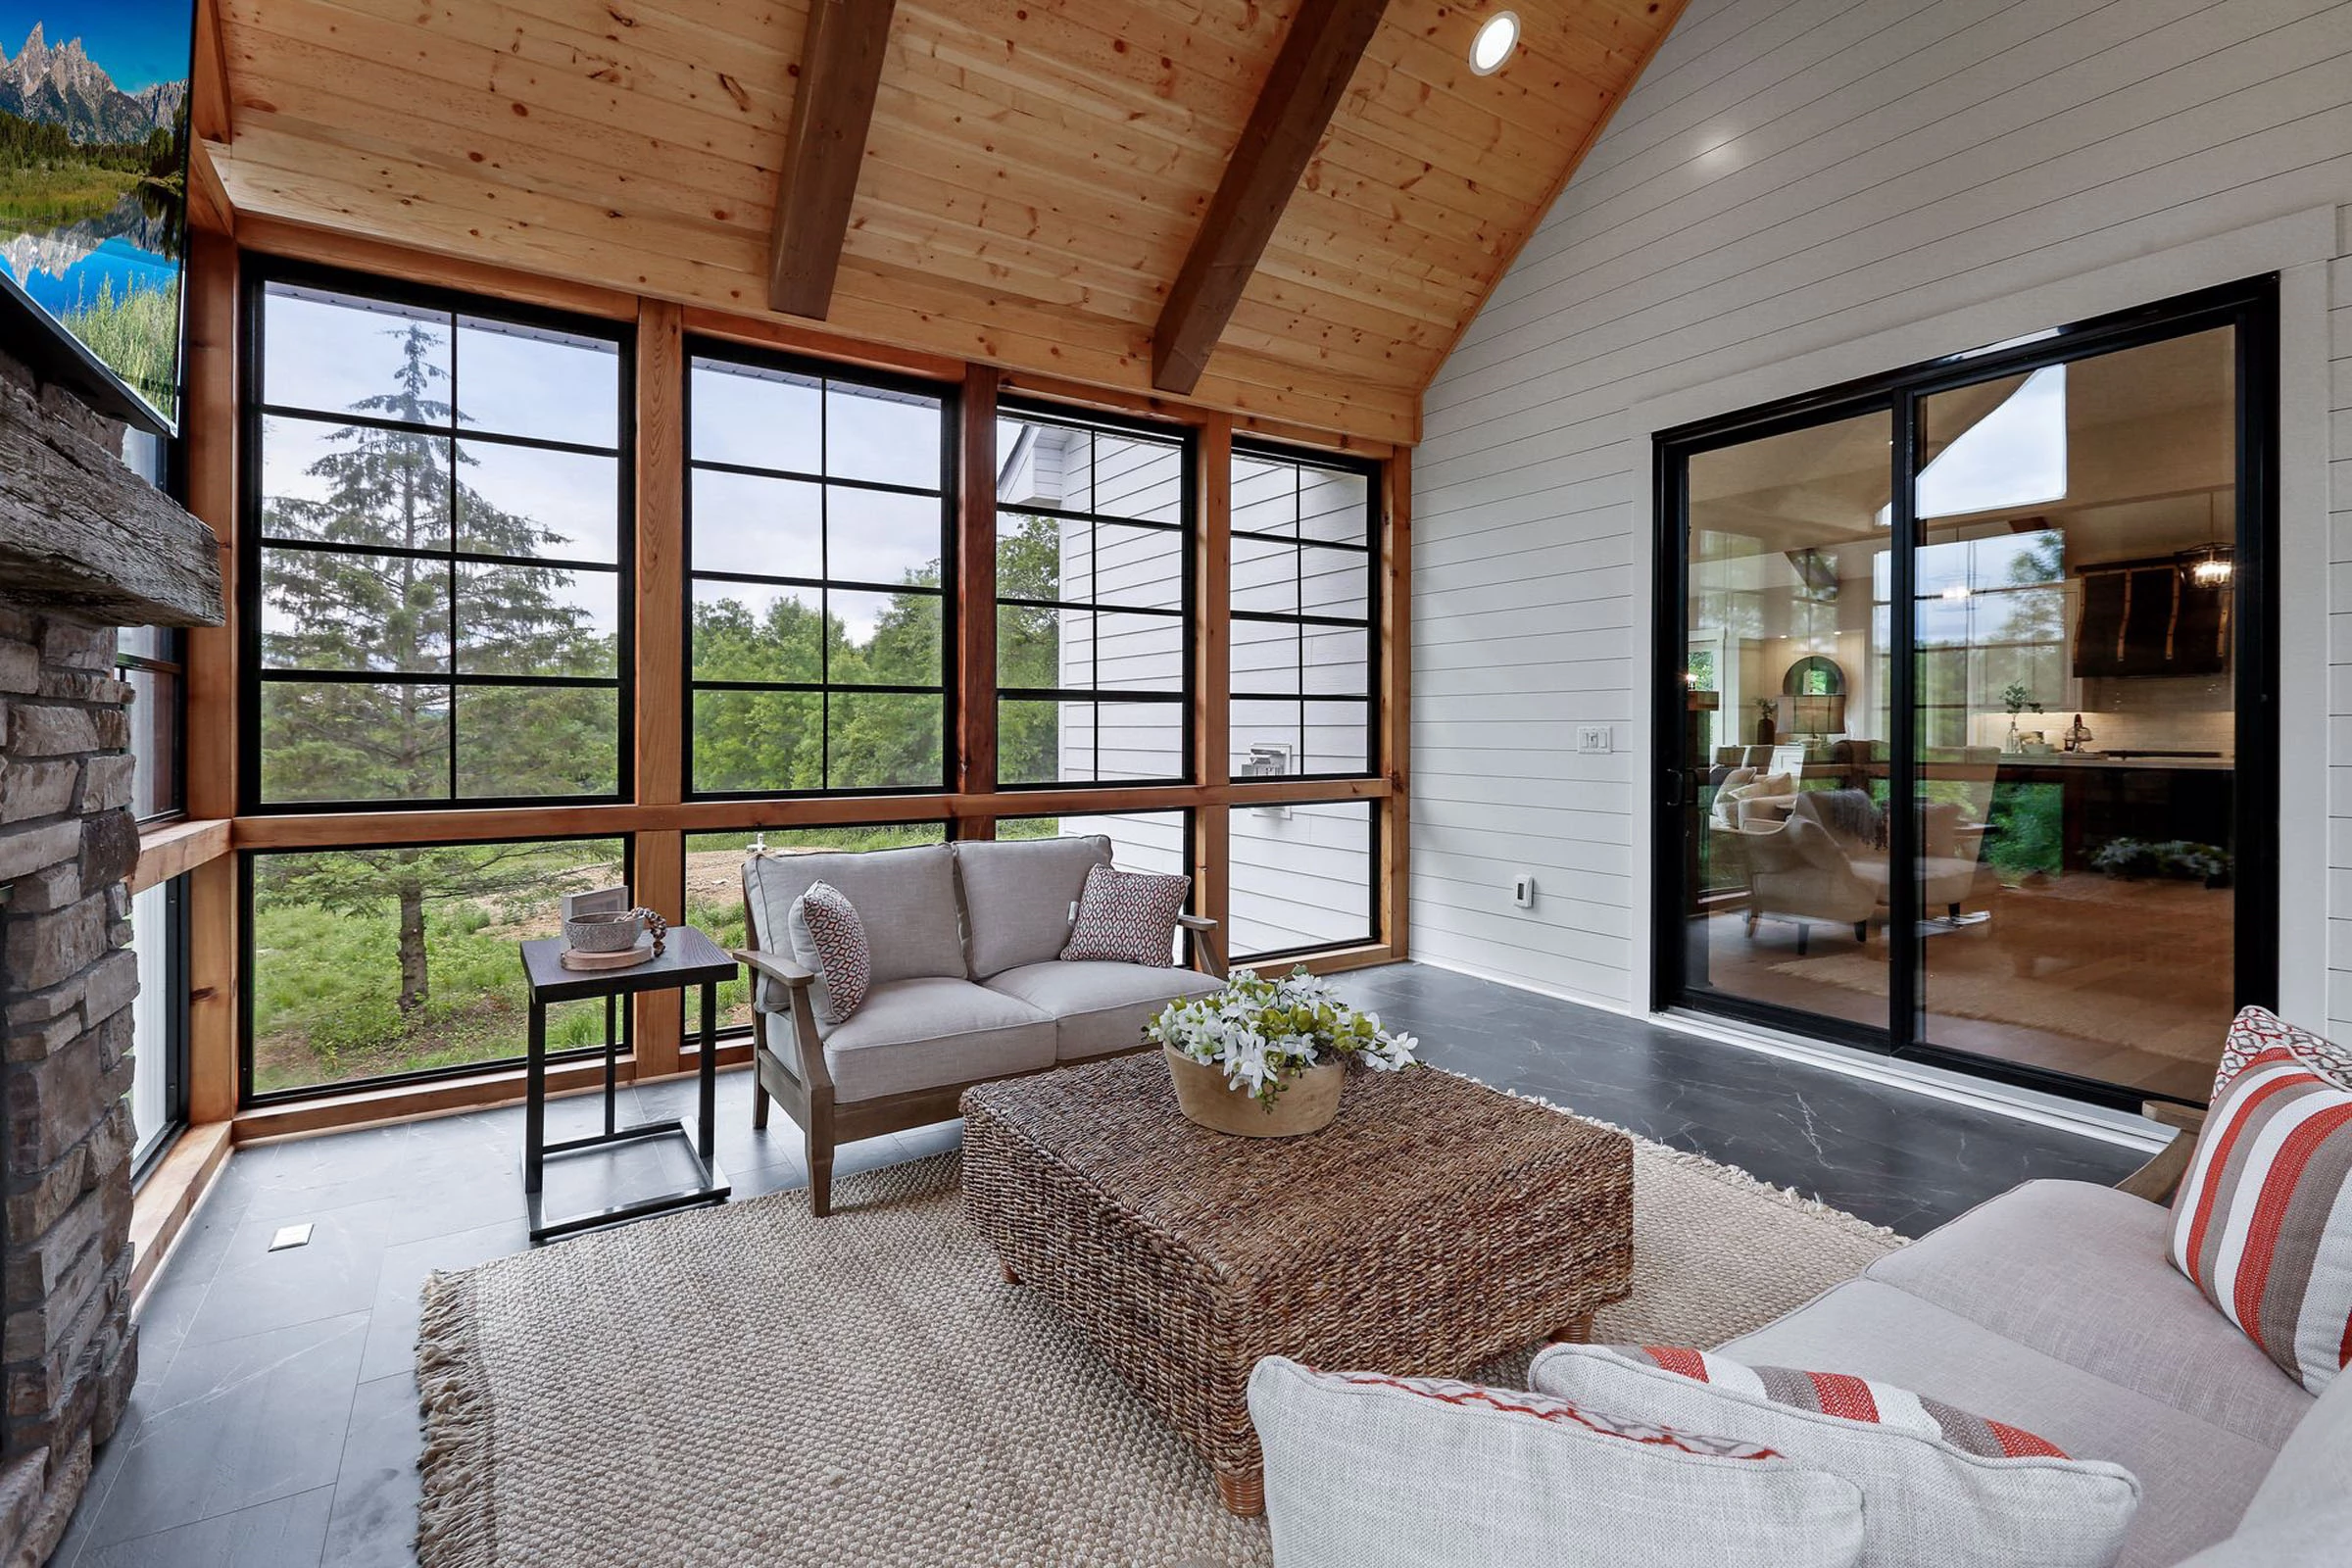 Three-season porch with knotty pine